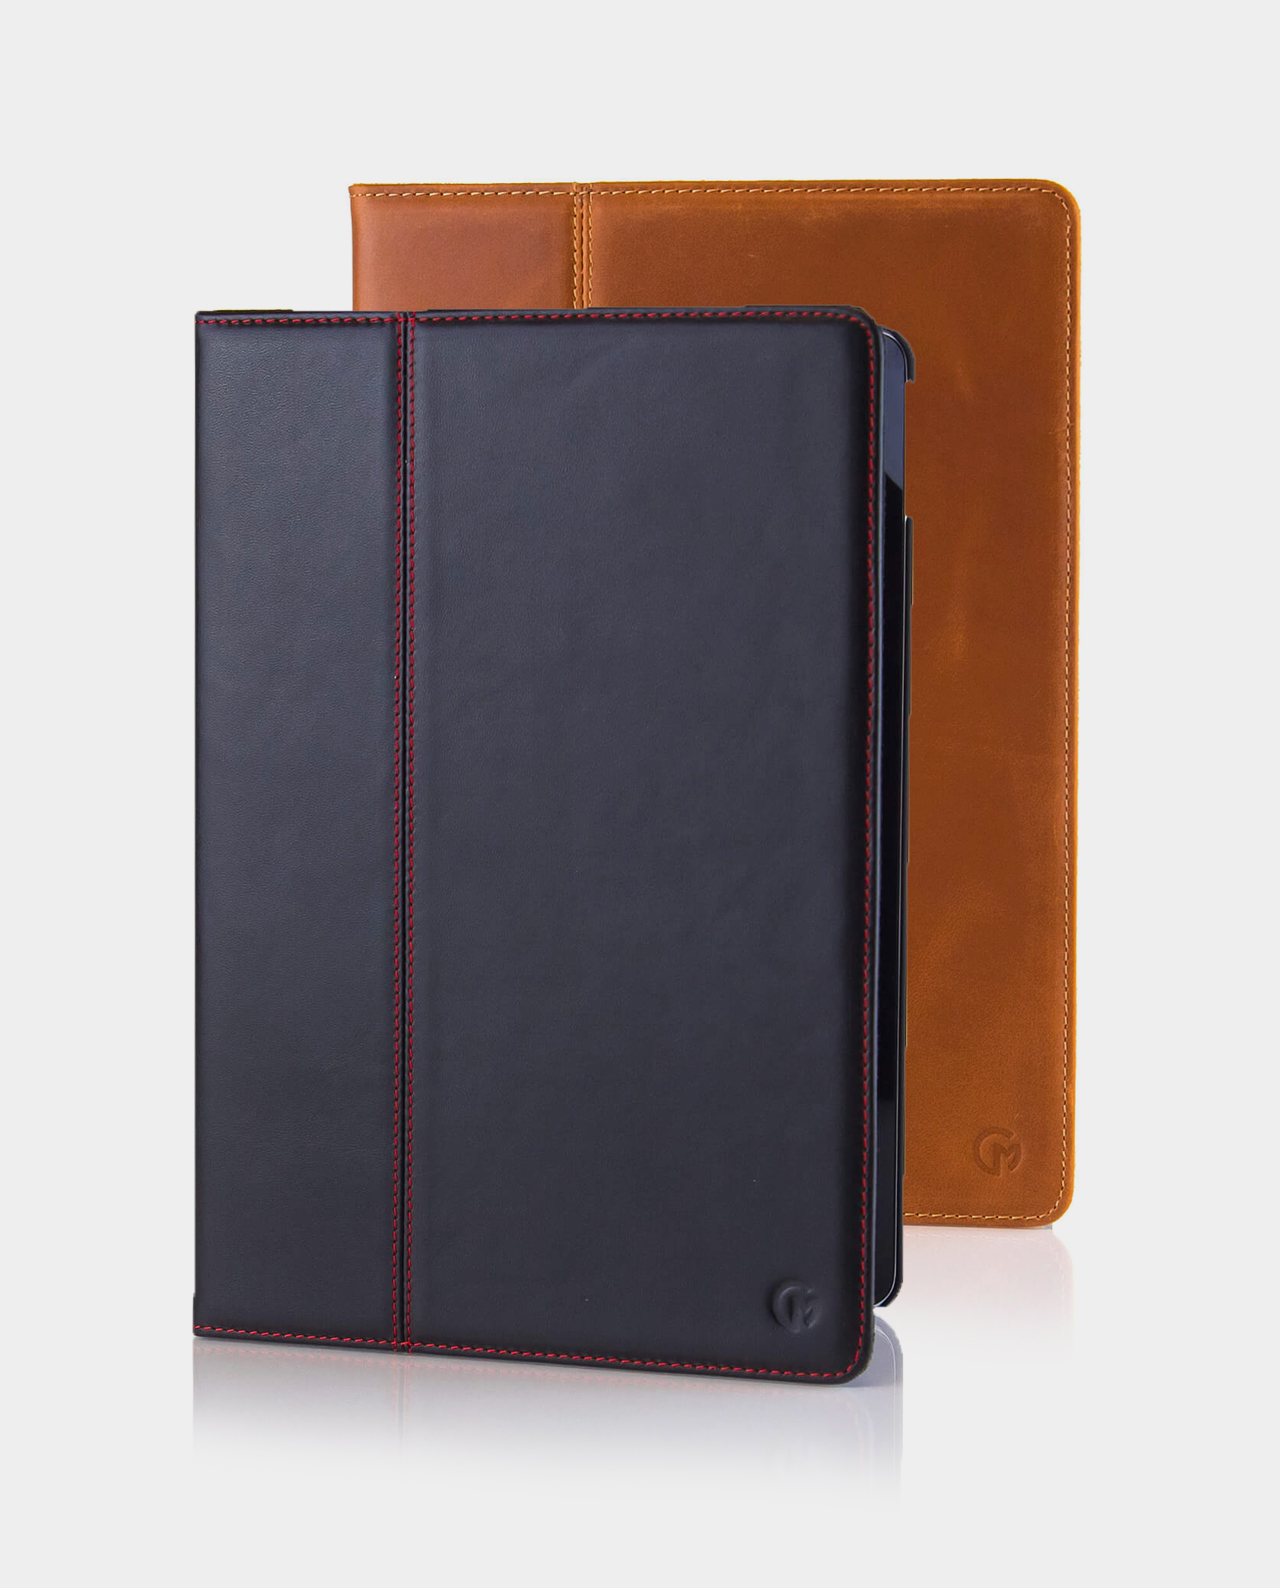 leather ipad case 9.7 pro leather ipad portfolio ipad 6th genertaion leather case leather ipad case ipad 6 case Leather ipad 9.7 case